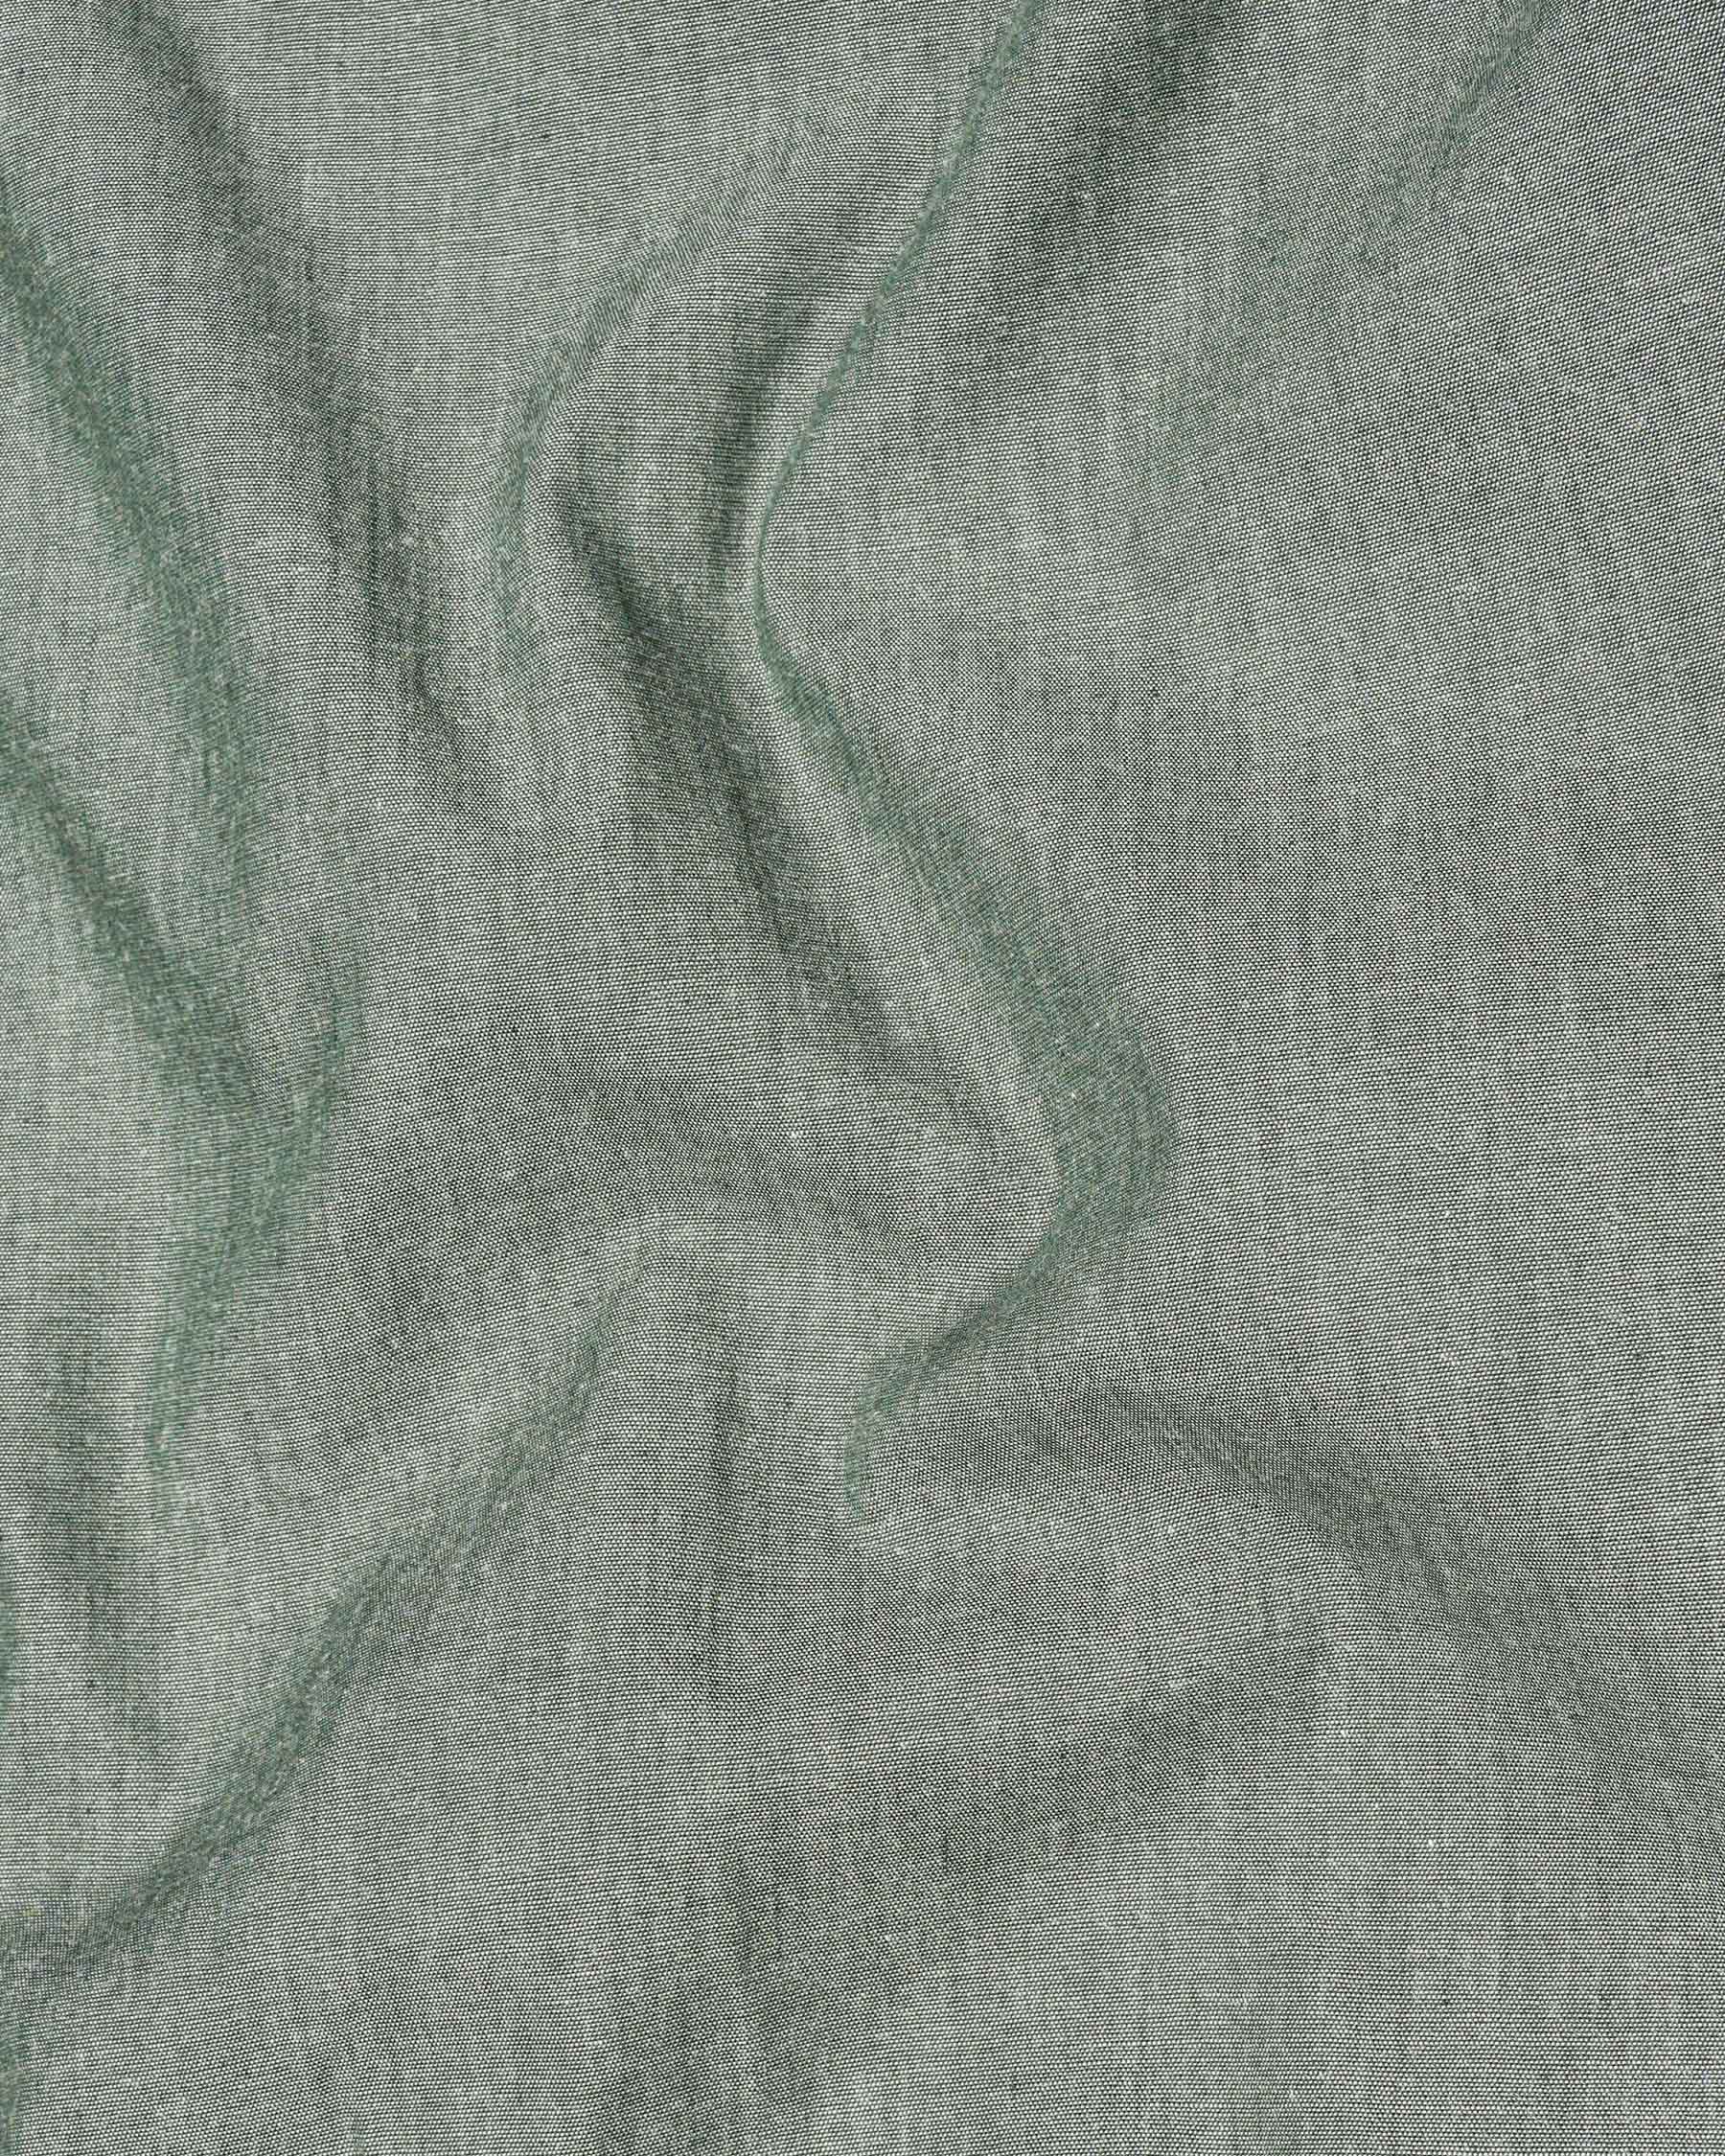 Chalice Green Dobby Textured overshirt/Shacket